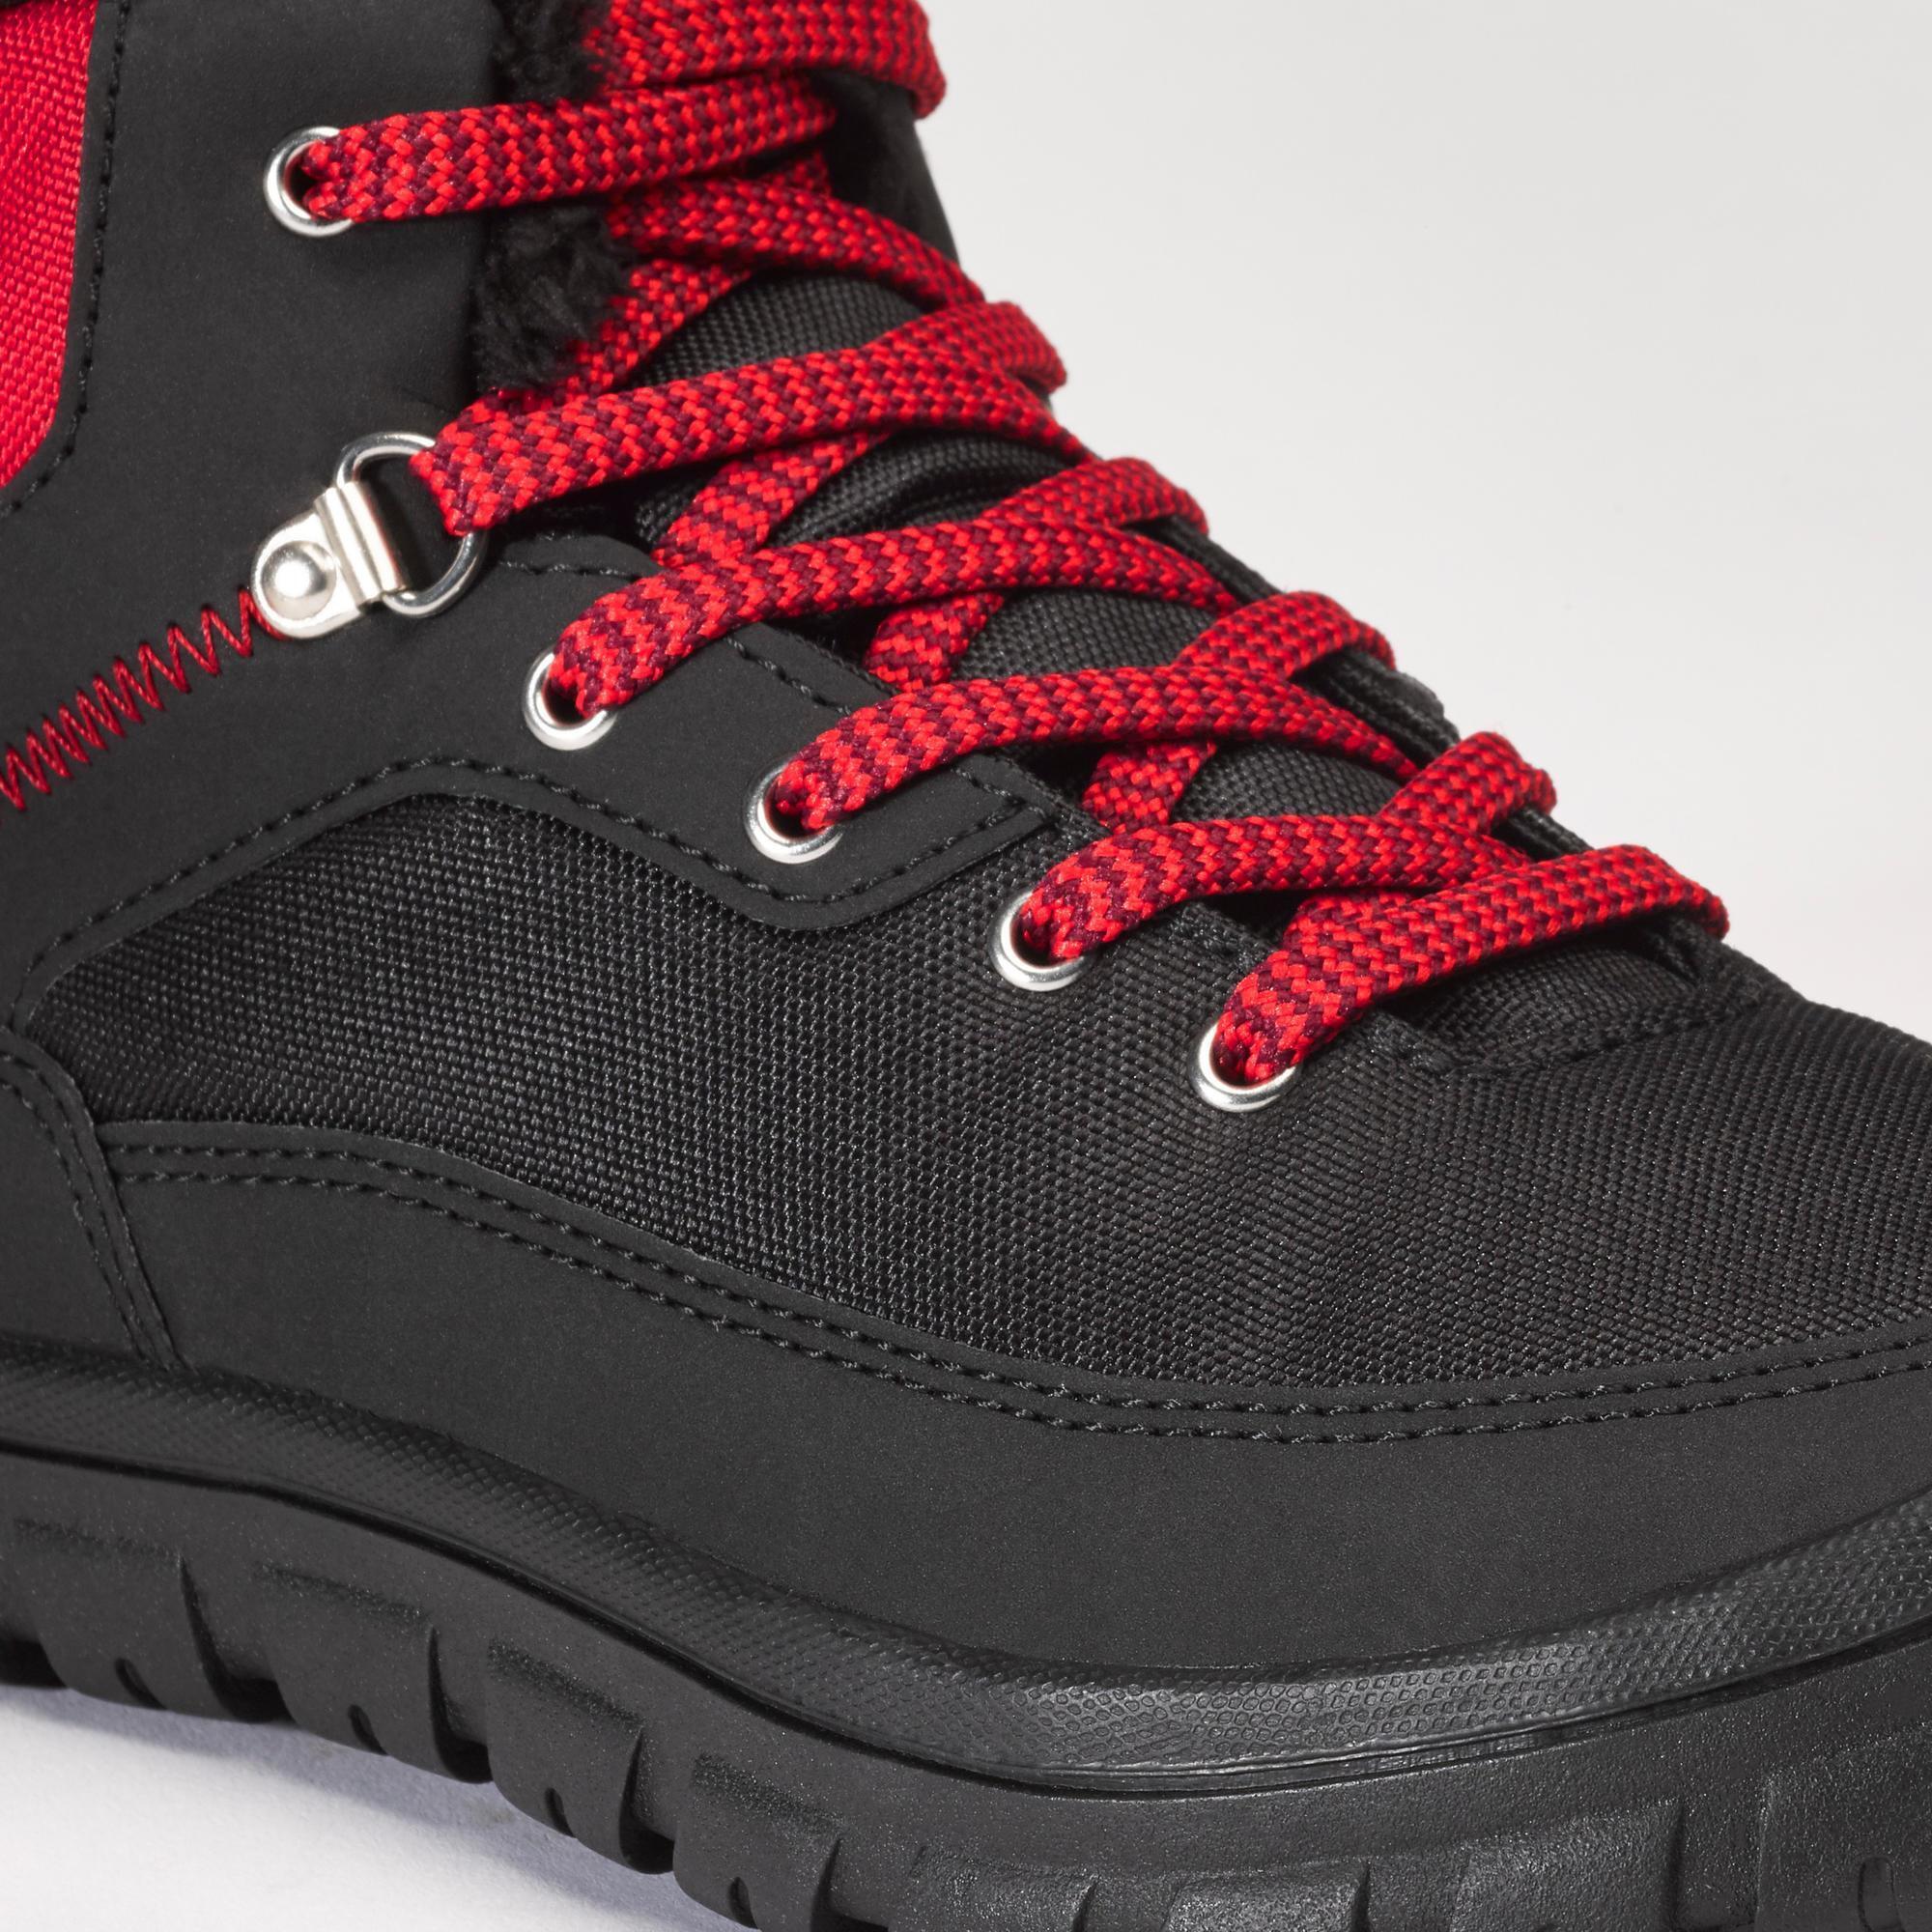 Kids’ Warm, Waterproof Lace-up Hiking Boots SH100 Warm Size 1 - 5.5 5/7